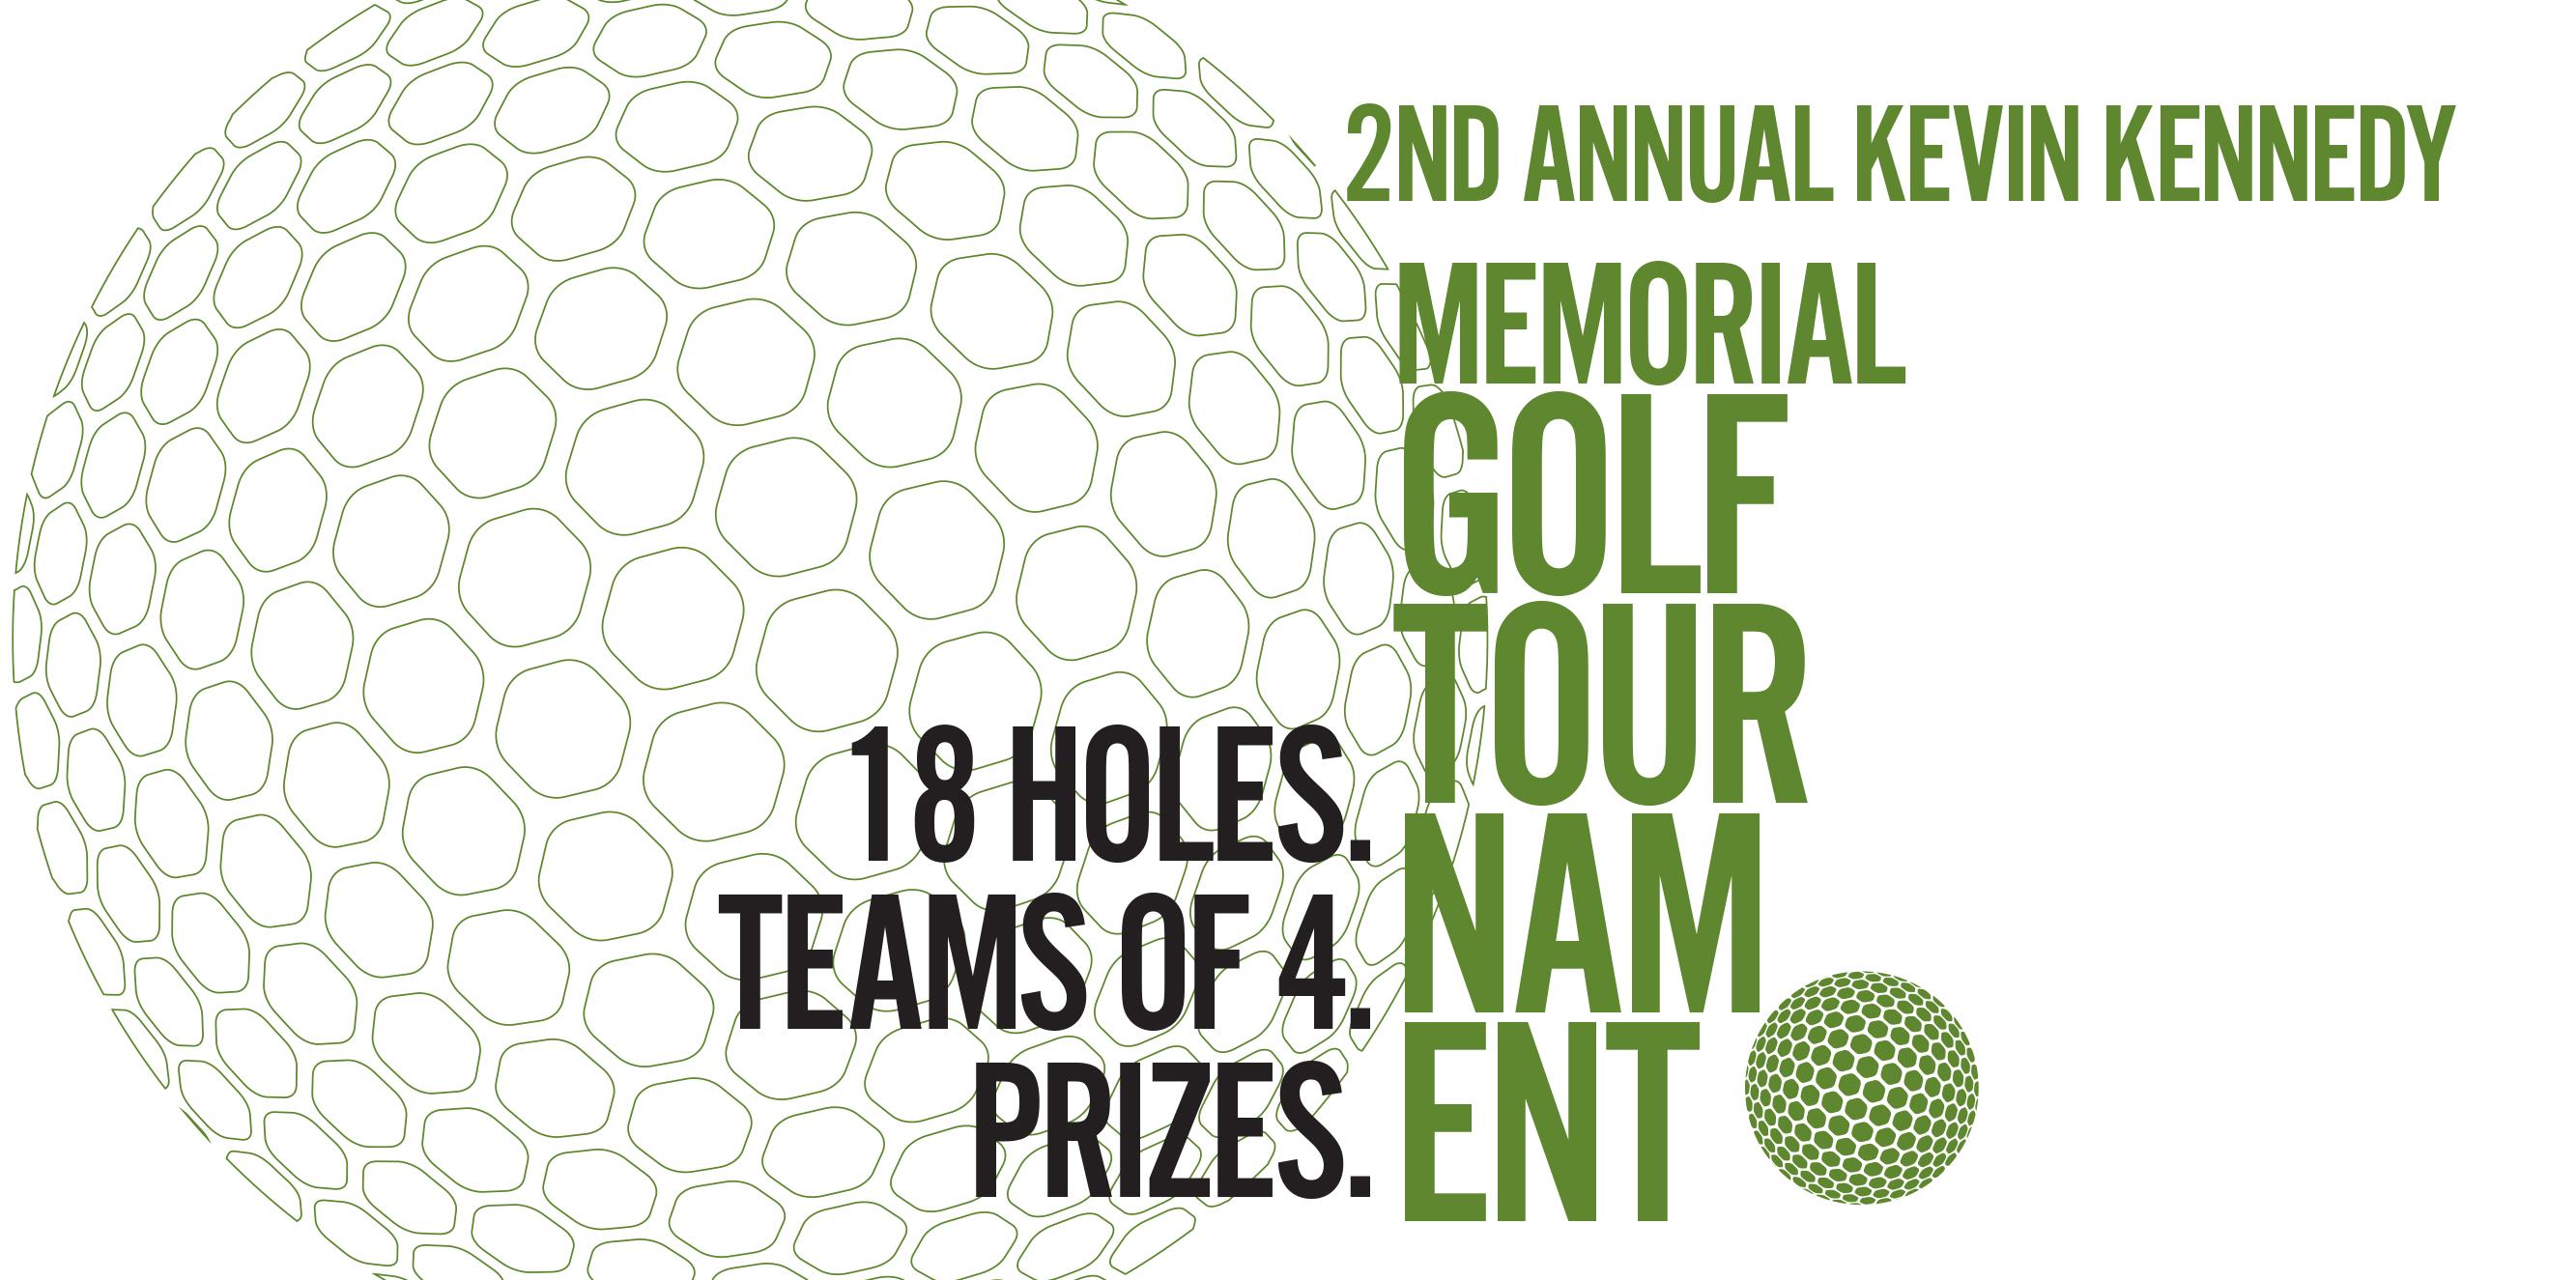 Brix Tavern Sponsored 2nd Annual Kevin Kennedy Memorial Golf Tournament